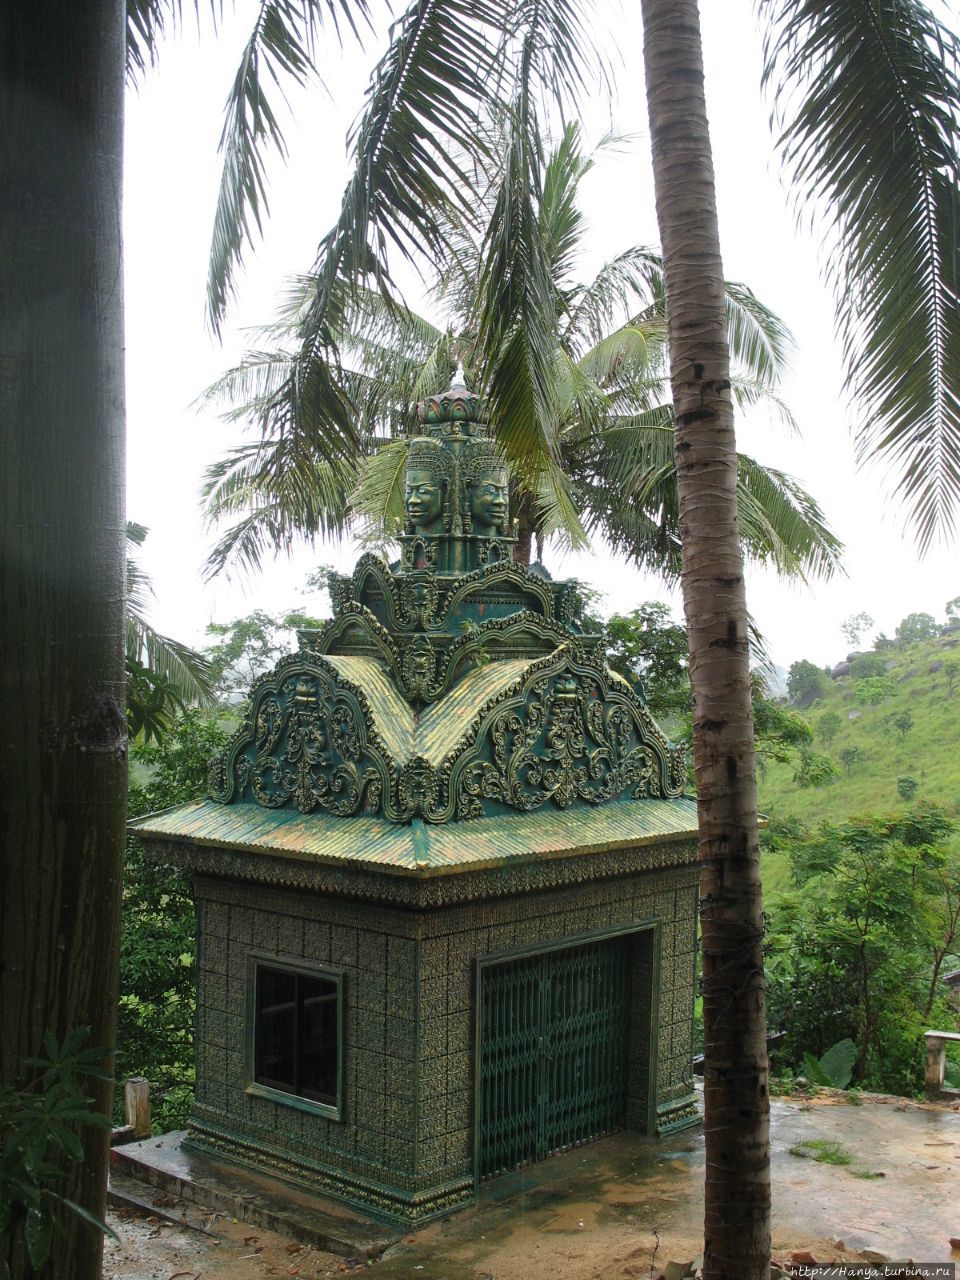 Храм Ват Леу